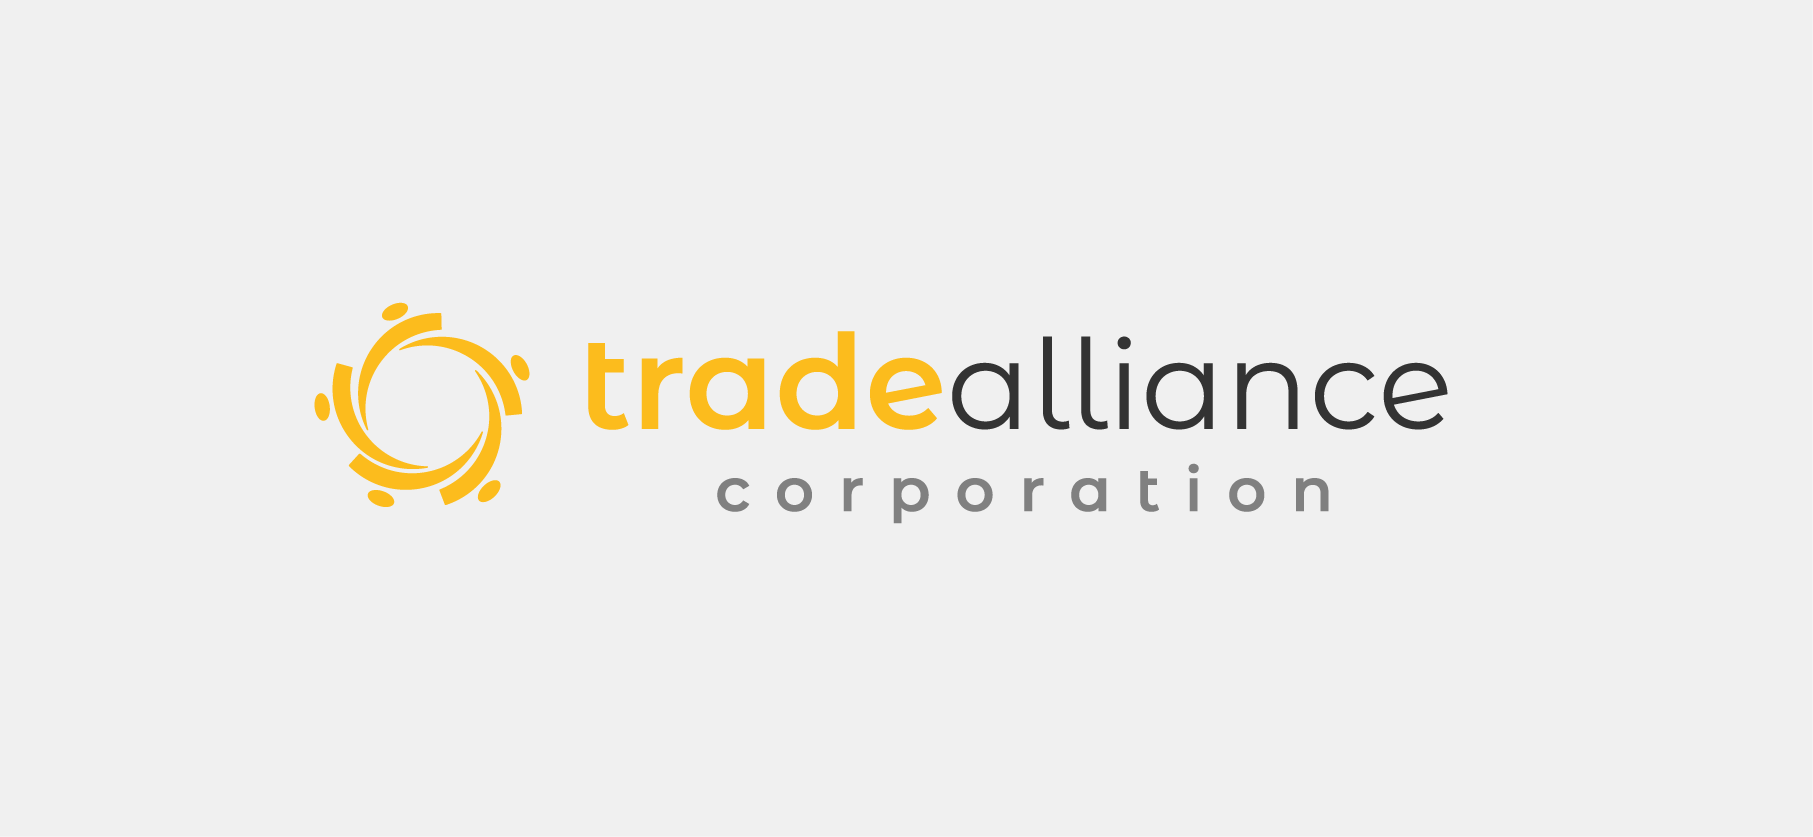 Ofertas de empleo en Trade Alliance Corporation